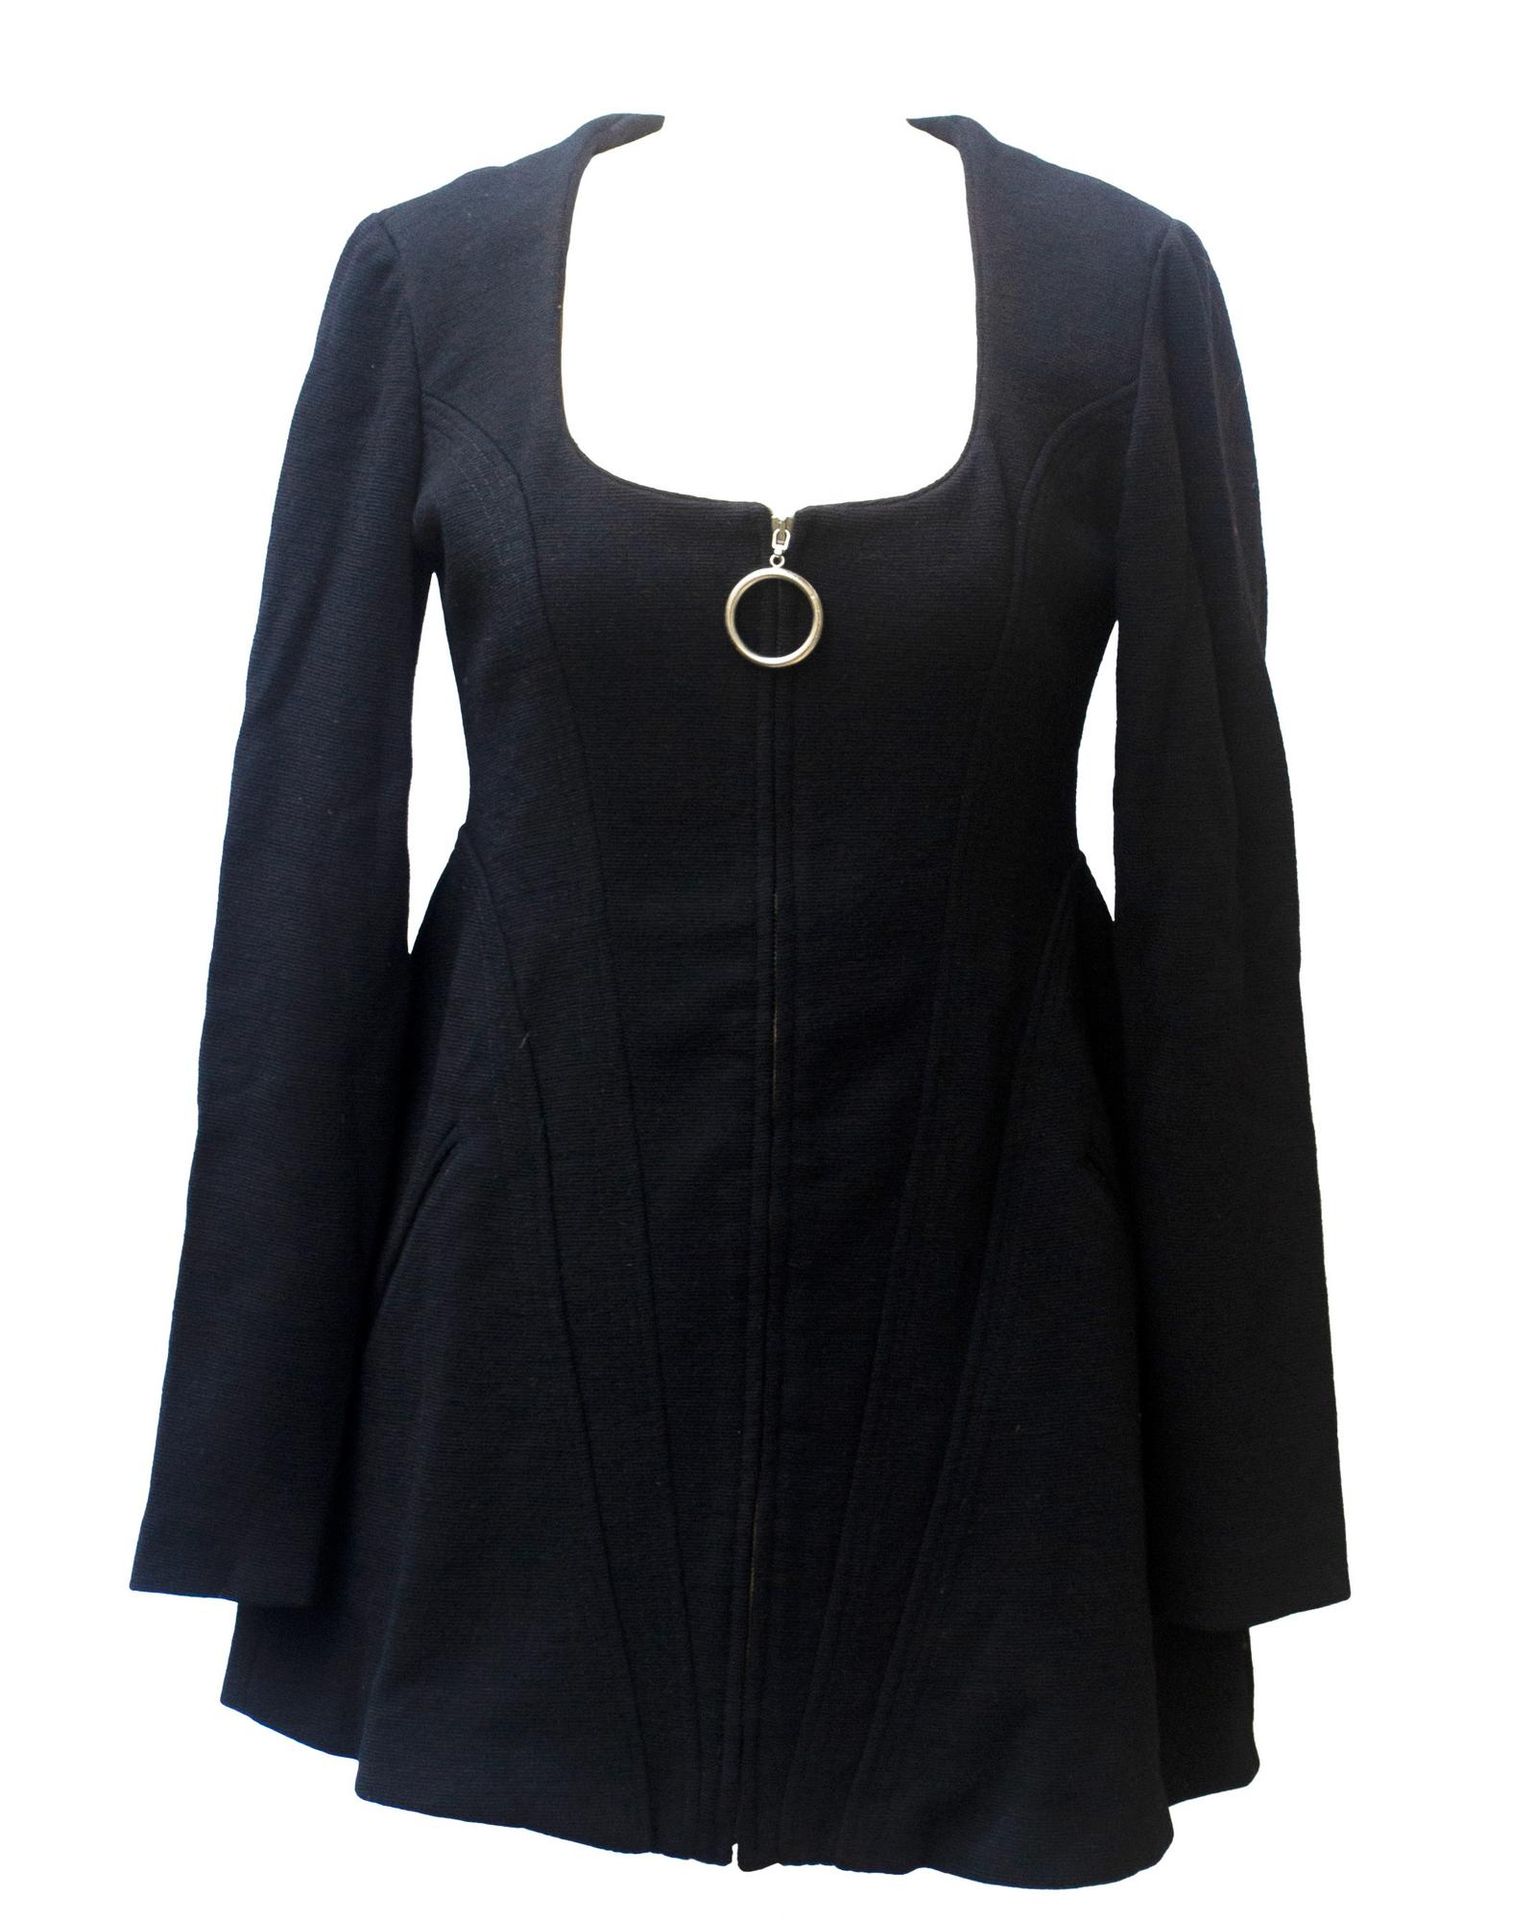 Null Martine Sitbon

MINI DRESS



Description:

Black wool jersey for this line&hellip;